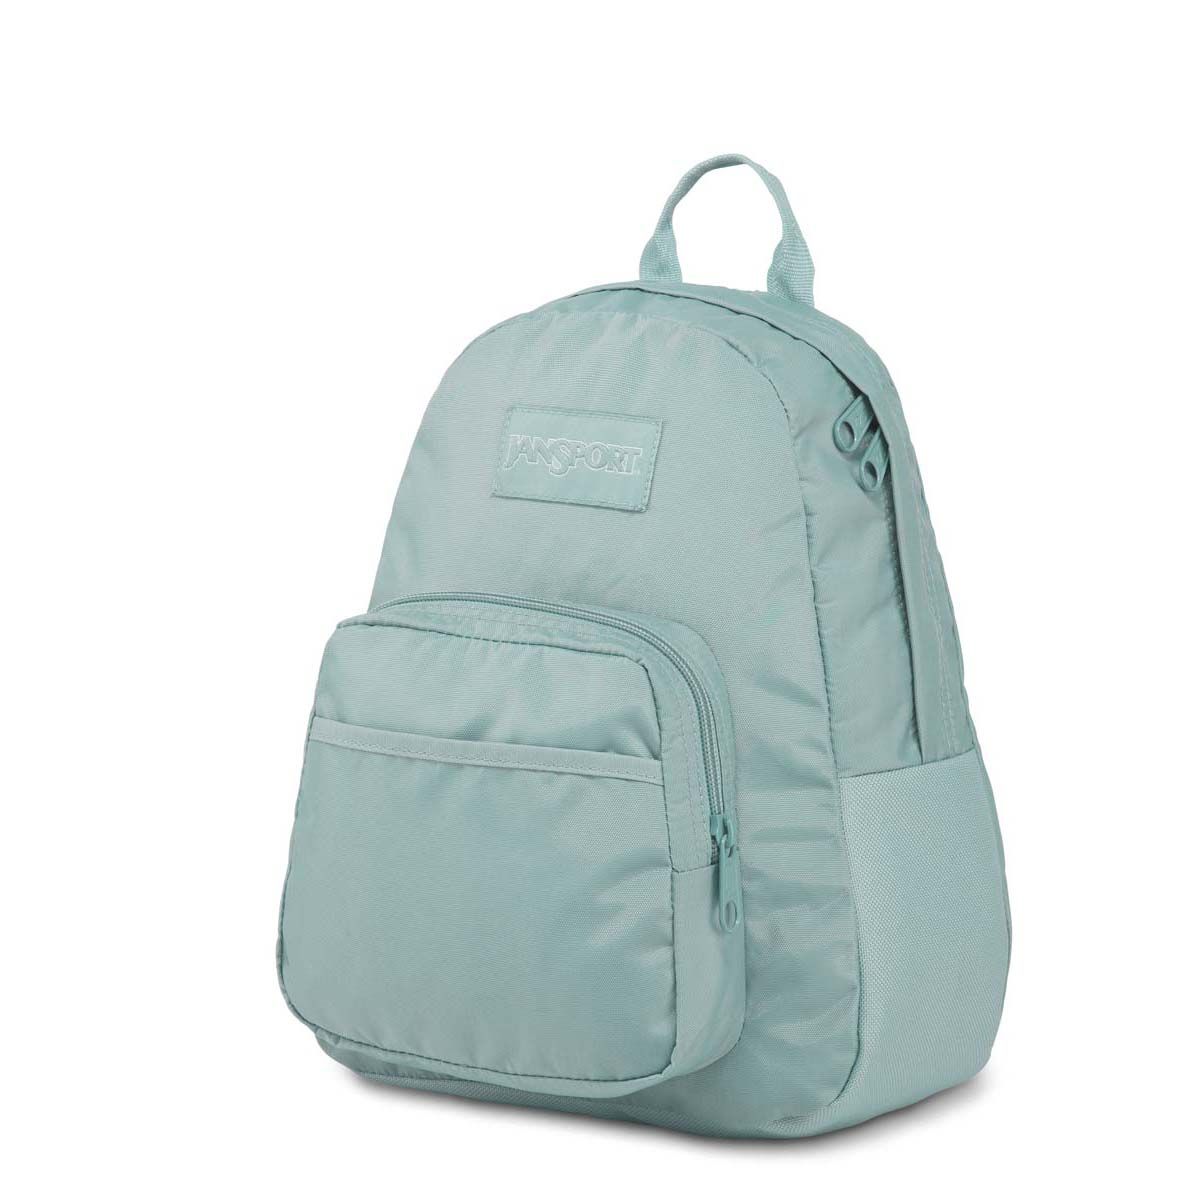 JanSport Mono Half Pint Mini Backpack in Moon Haze | Neon